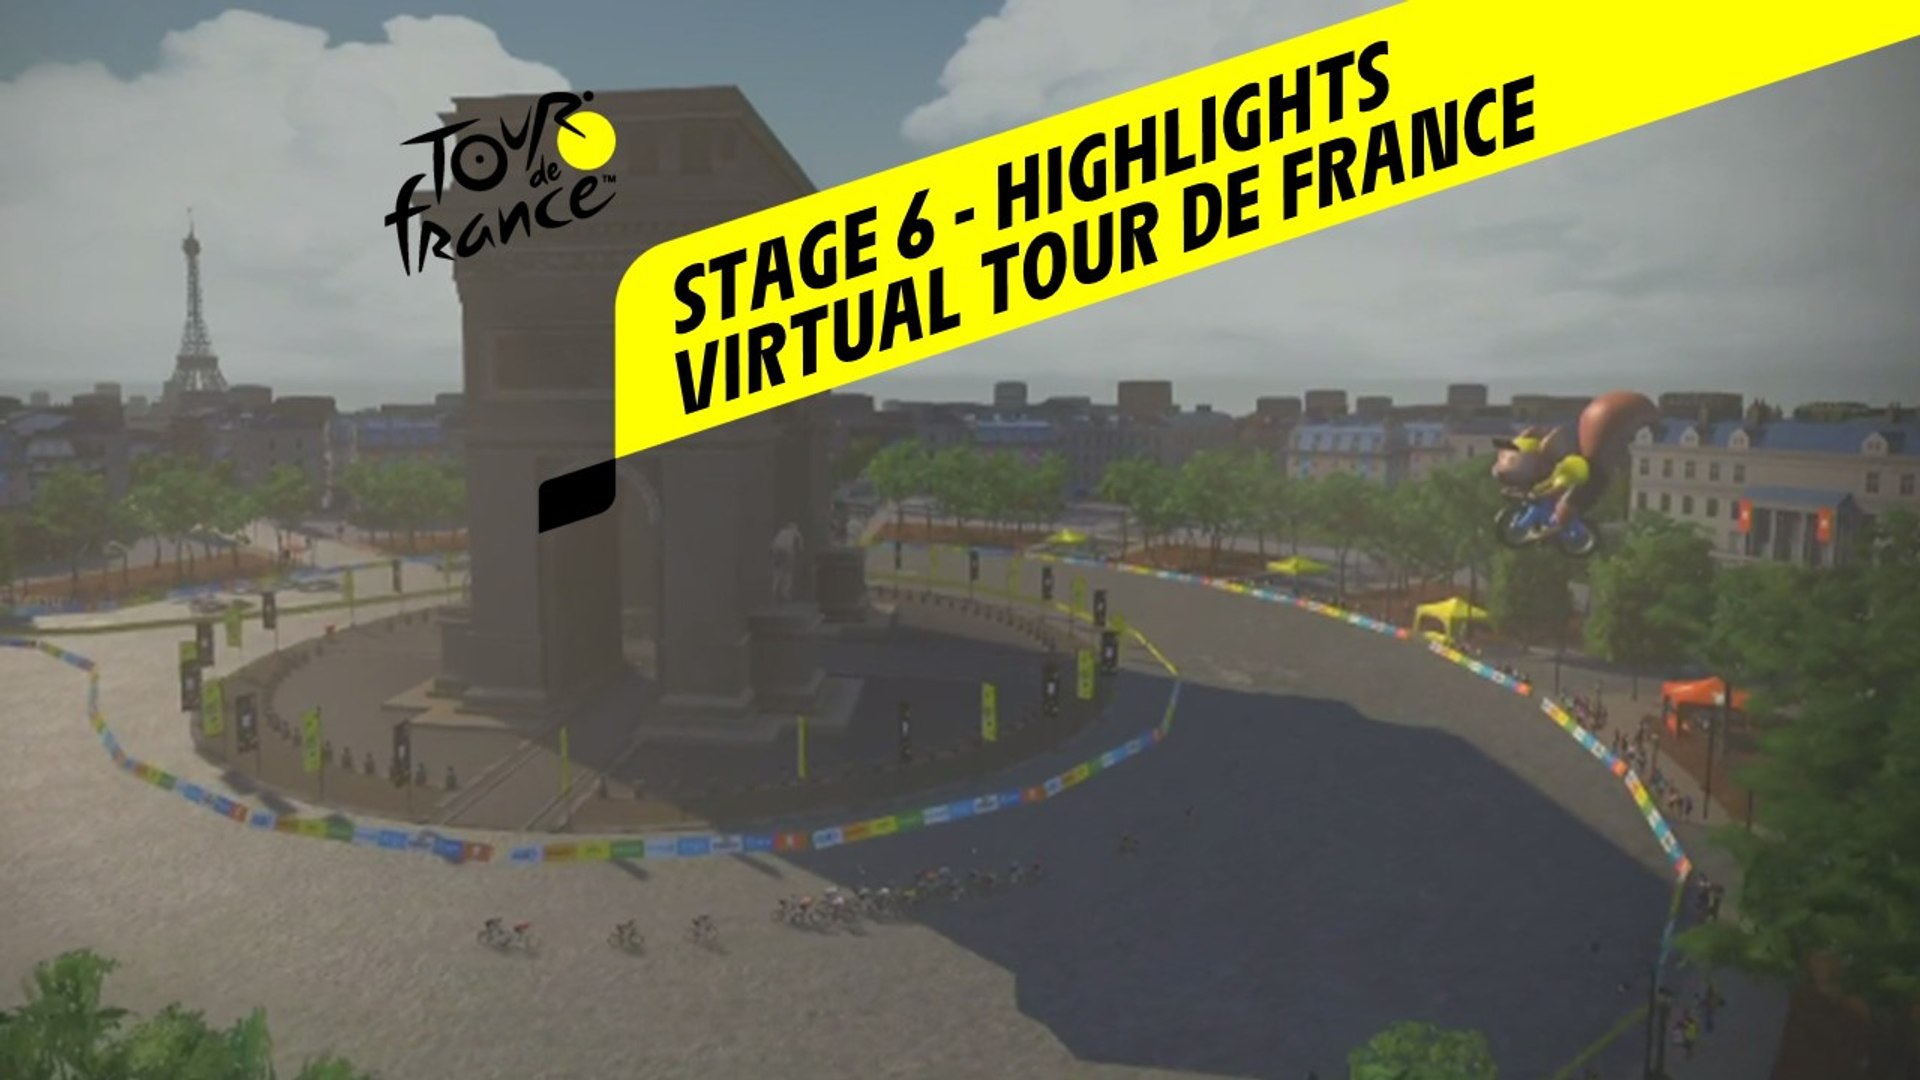 procedure lige ud Sommetider Virtual Tour de France 2020 - Stage 6 - Highlights - Vidéo Dailymotion